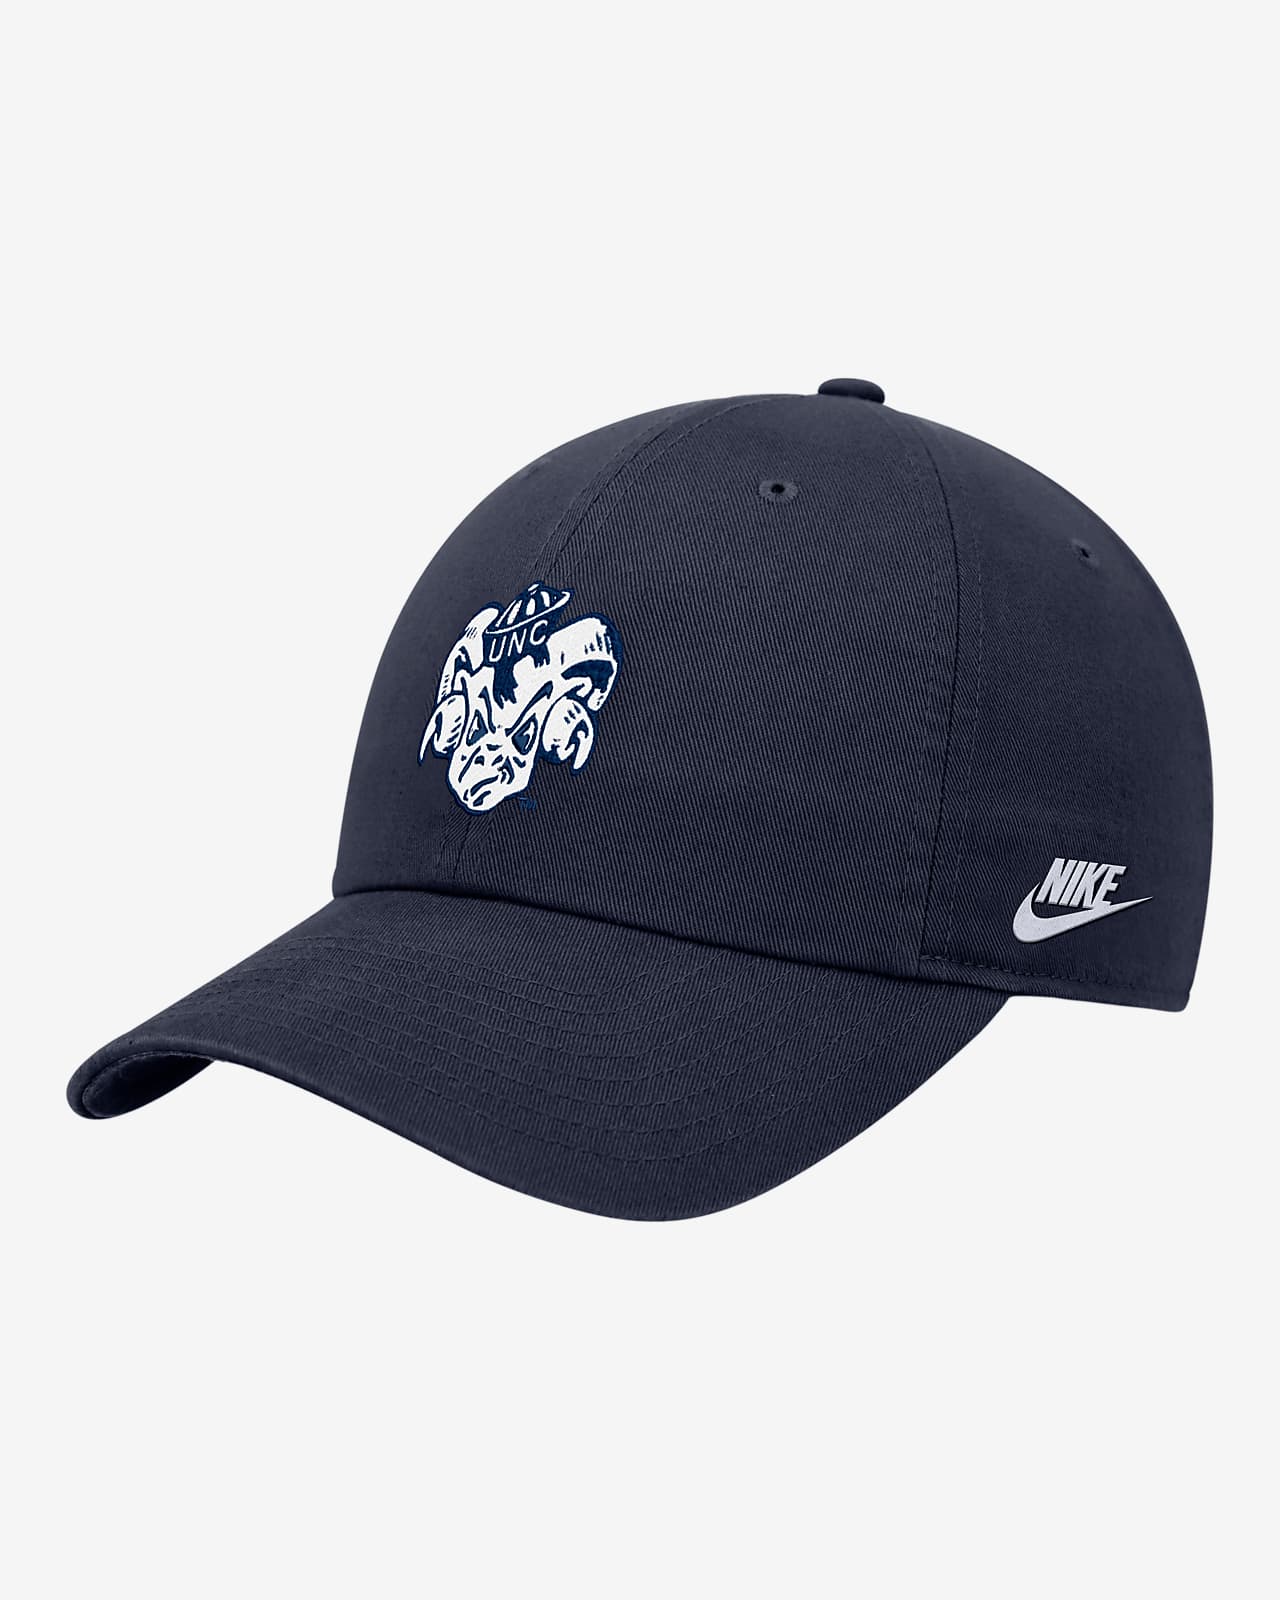 Gorra universitaria Nike UNC